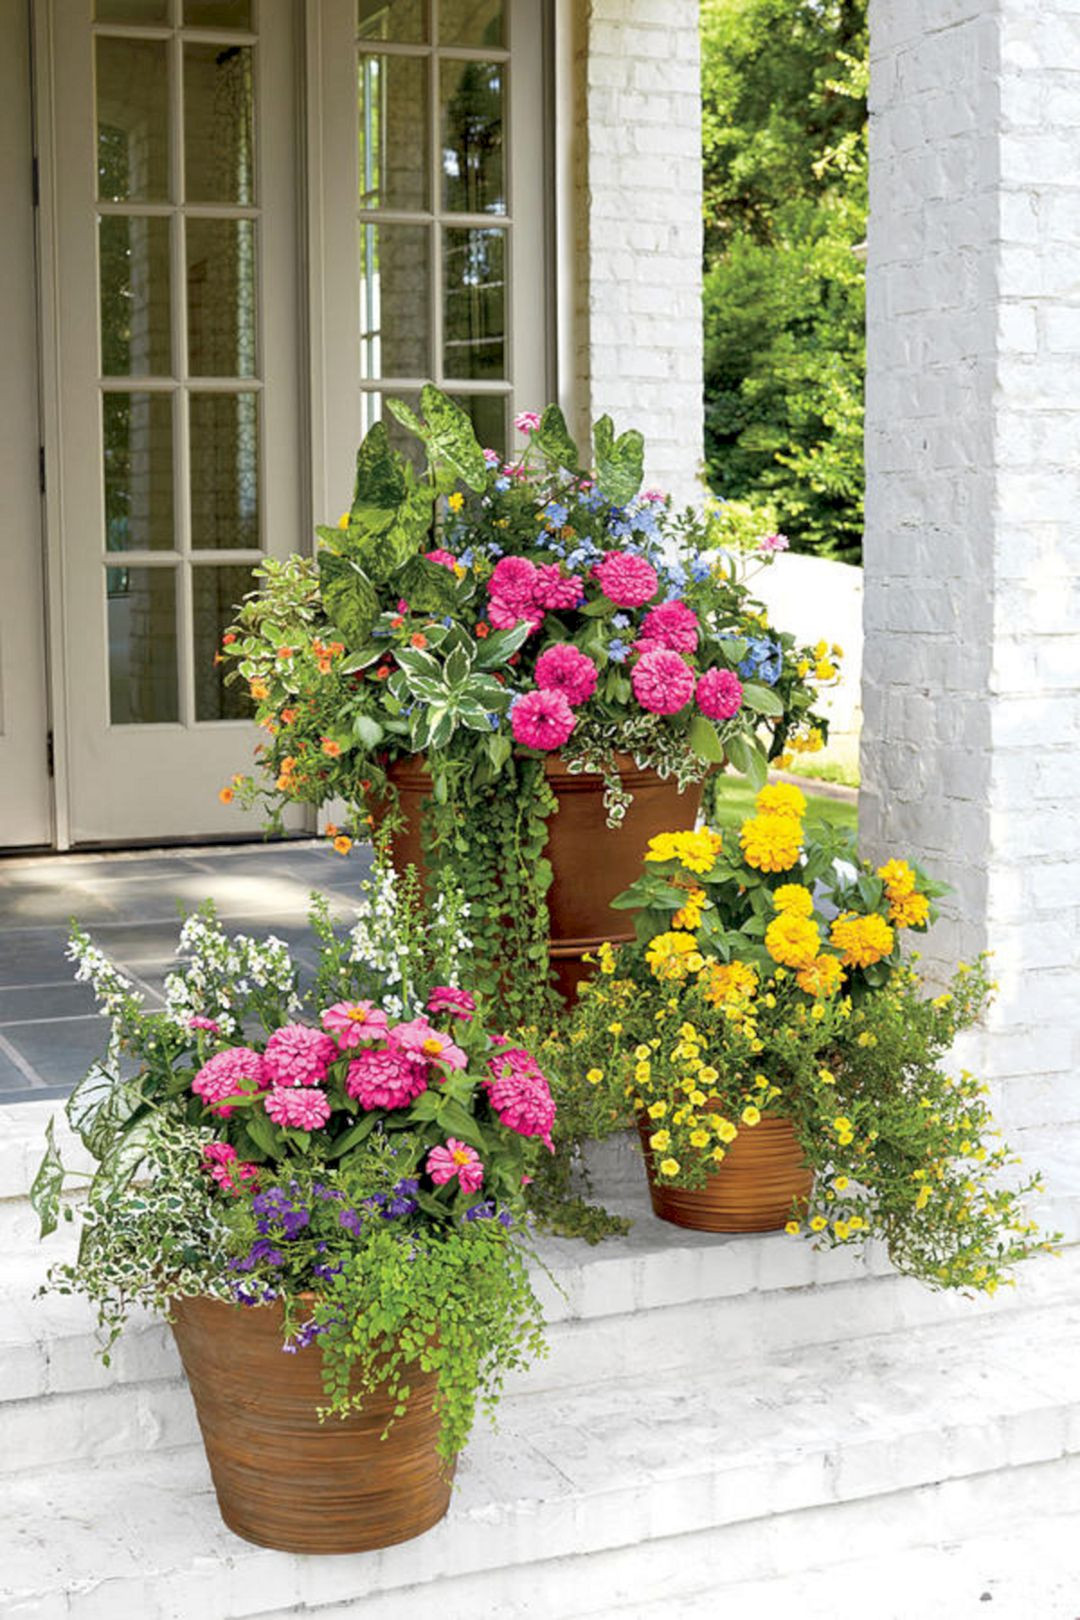 Best ideas about Porch Planter Ideas
. Save or Pin Front Porch Flower Planter Ideas 43 Front Porch Flower Now.